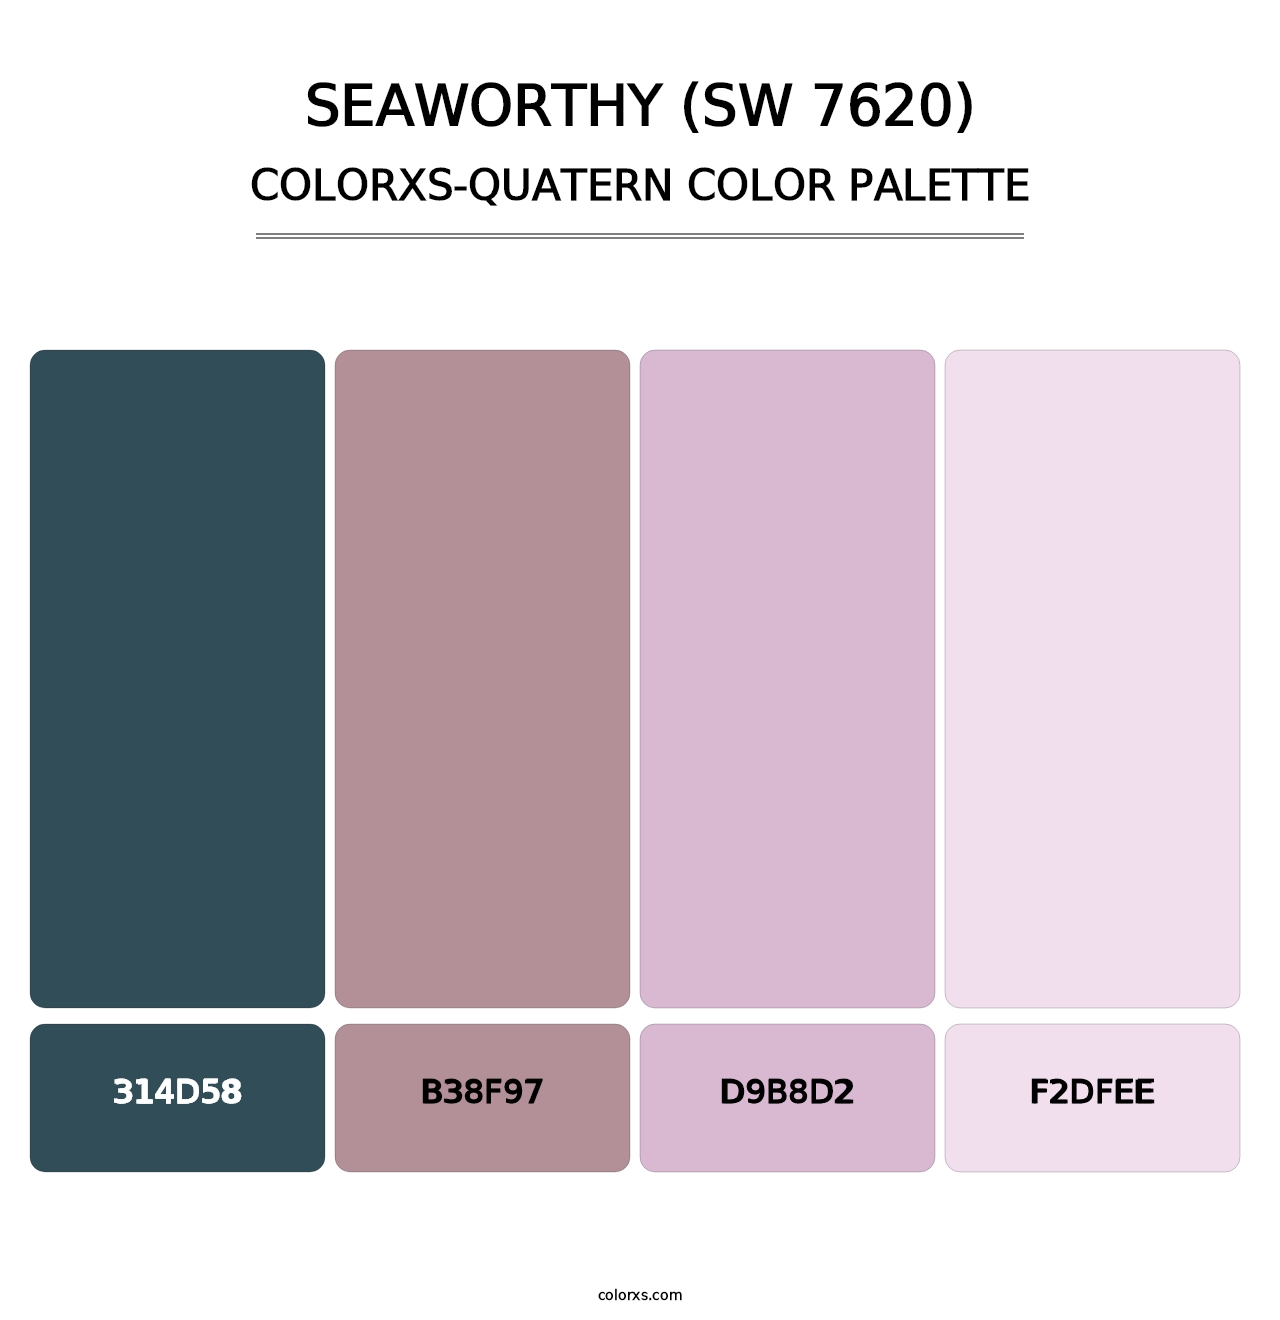 Seaworthy (SW 7620) - Colorxs Quatern Palette